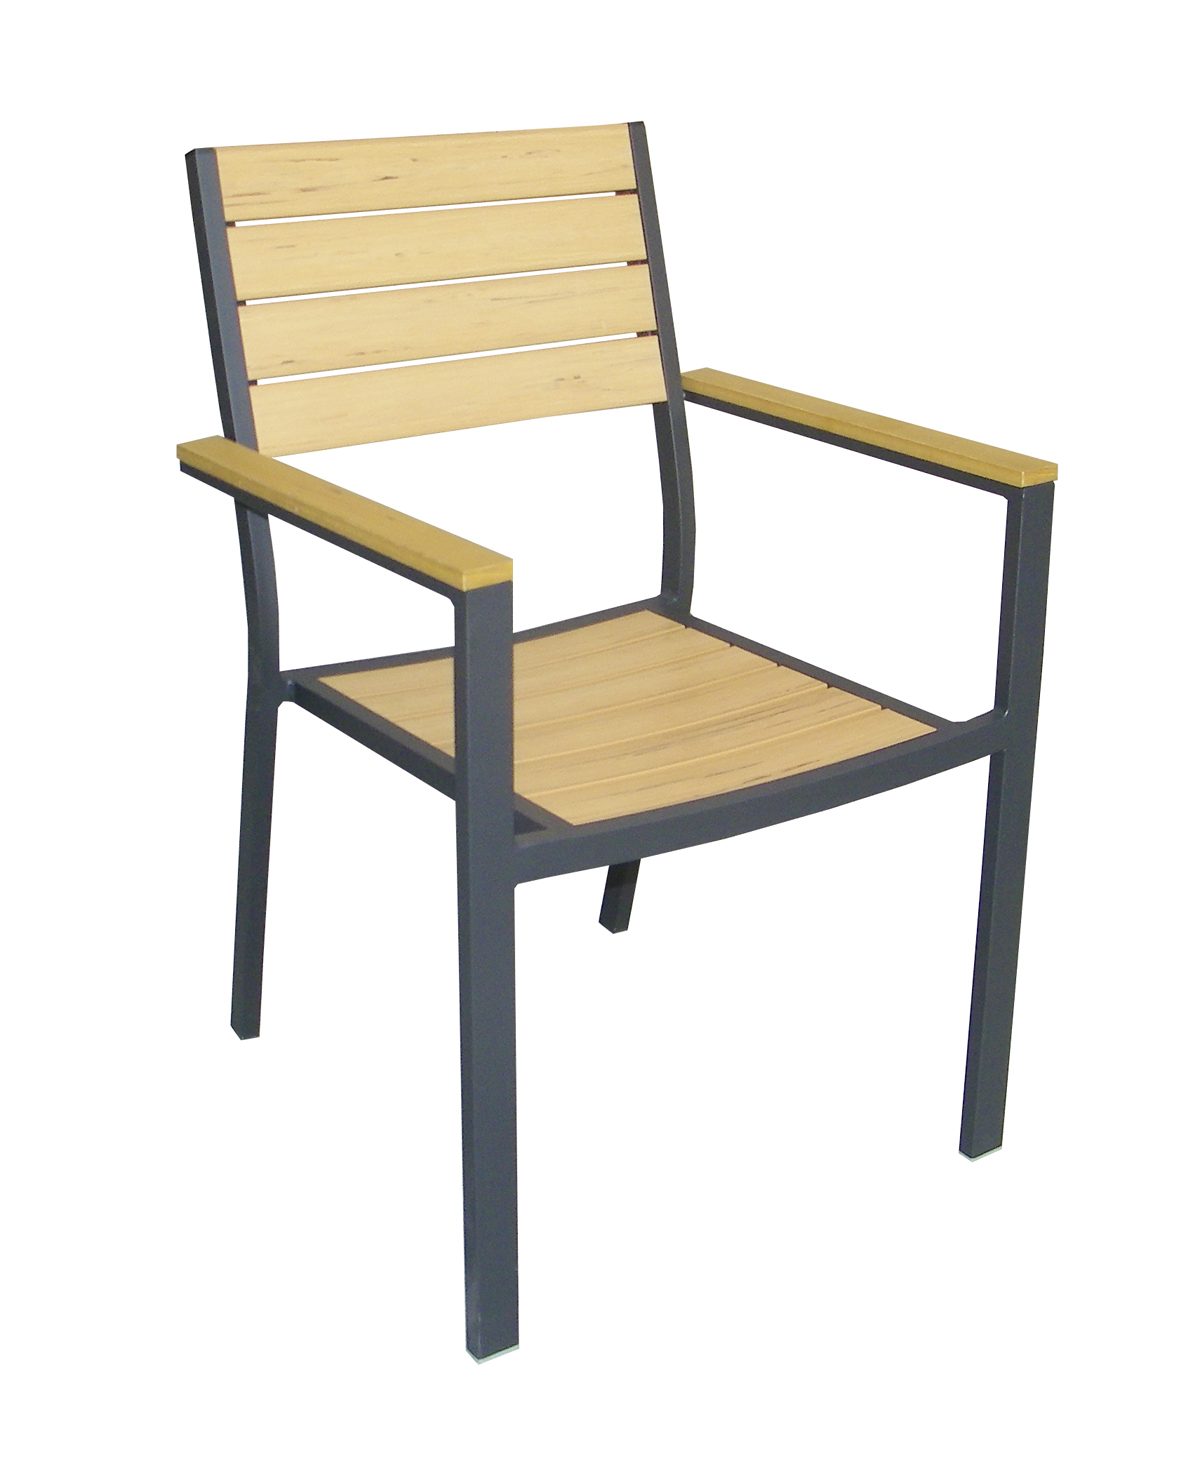 Aluminum frame plastic wood outdoor chair